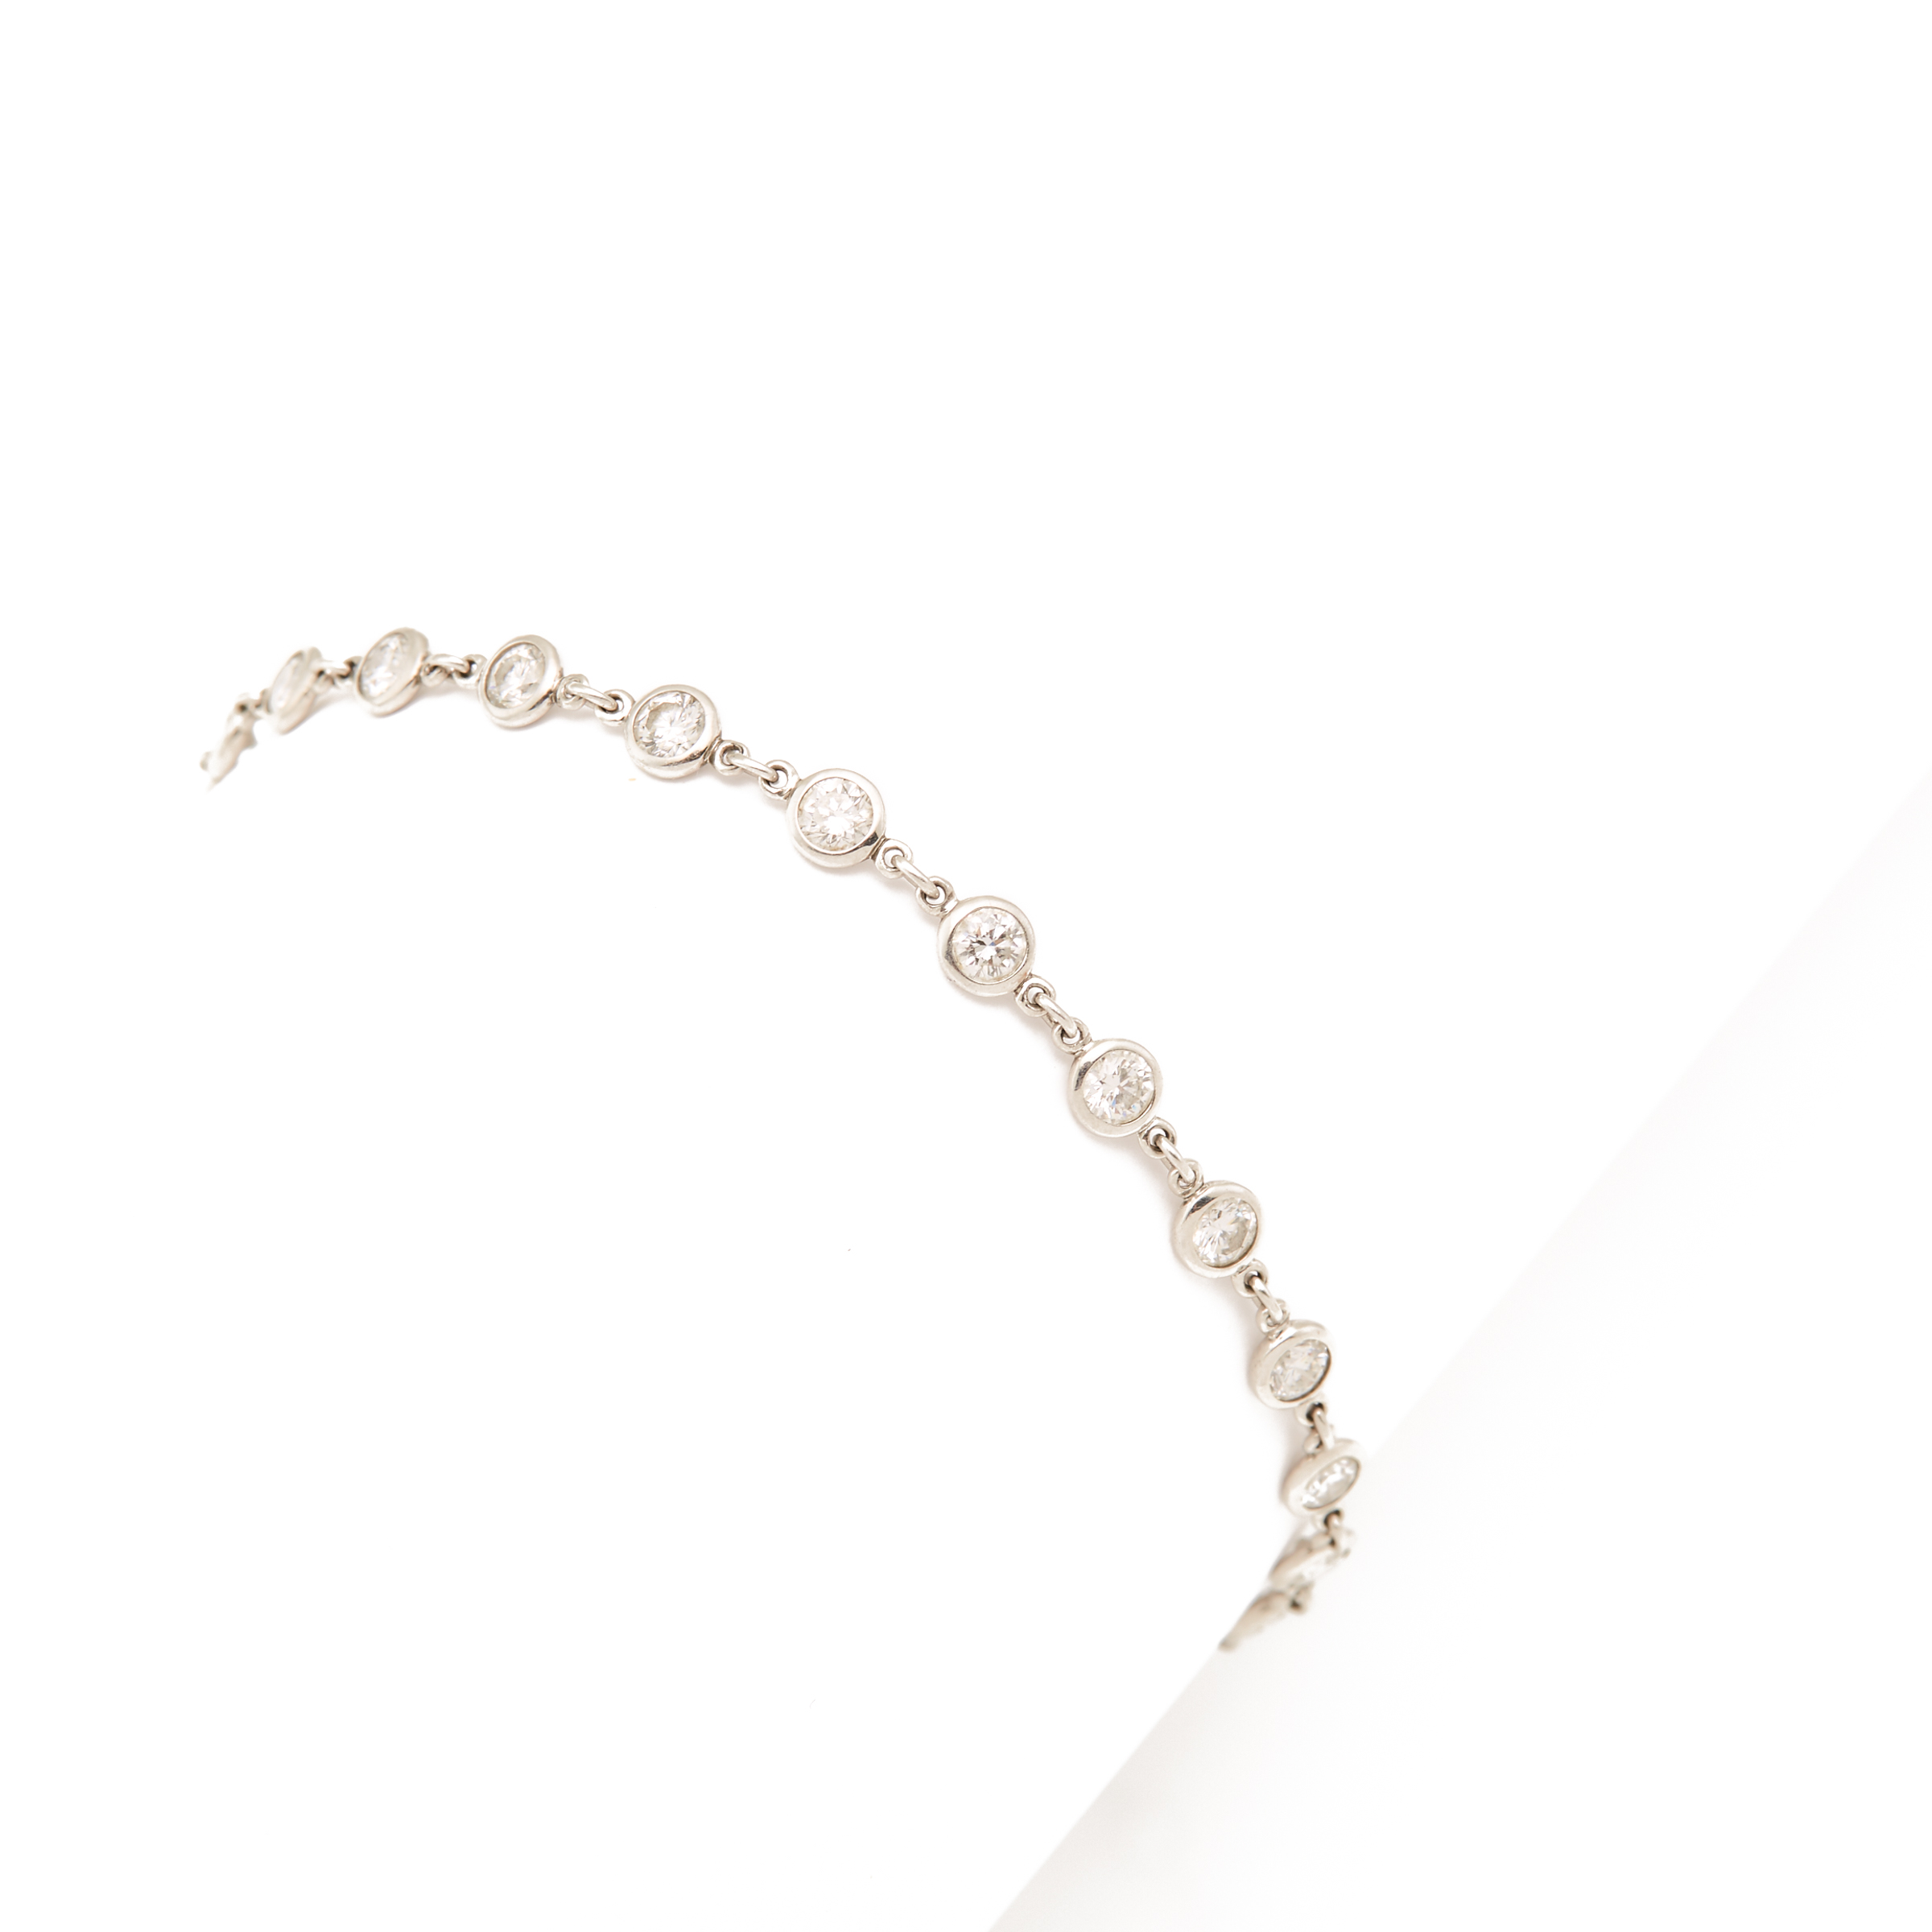 Tiffany & Co. Elsa Peretti Platinum "Every Other Link" Bracelet